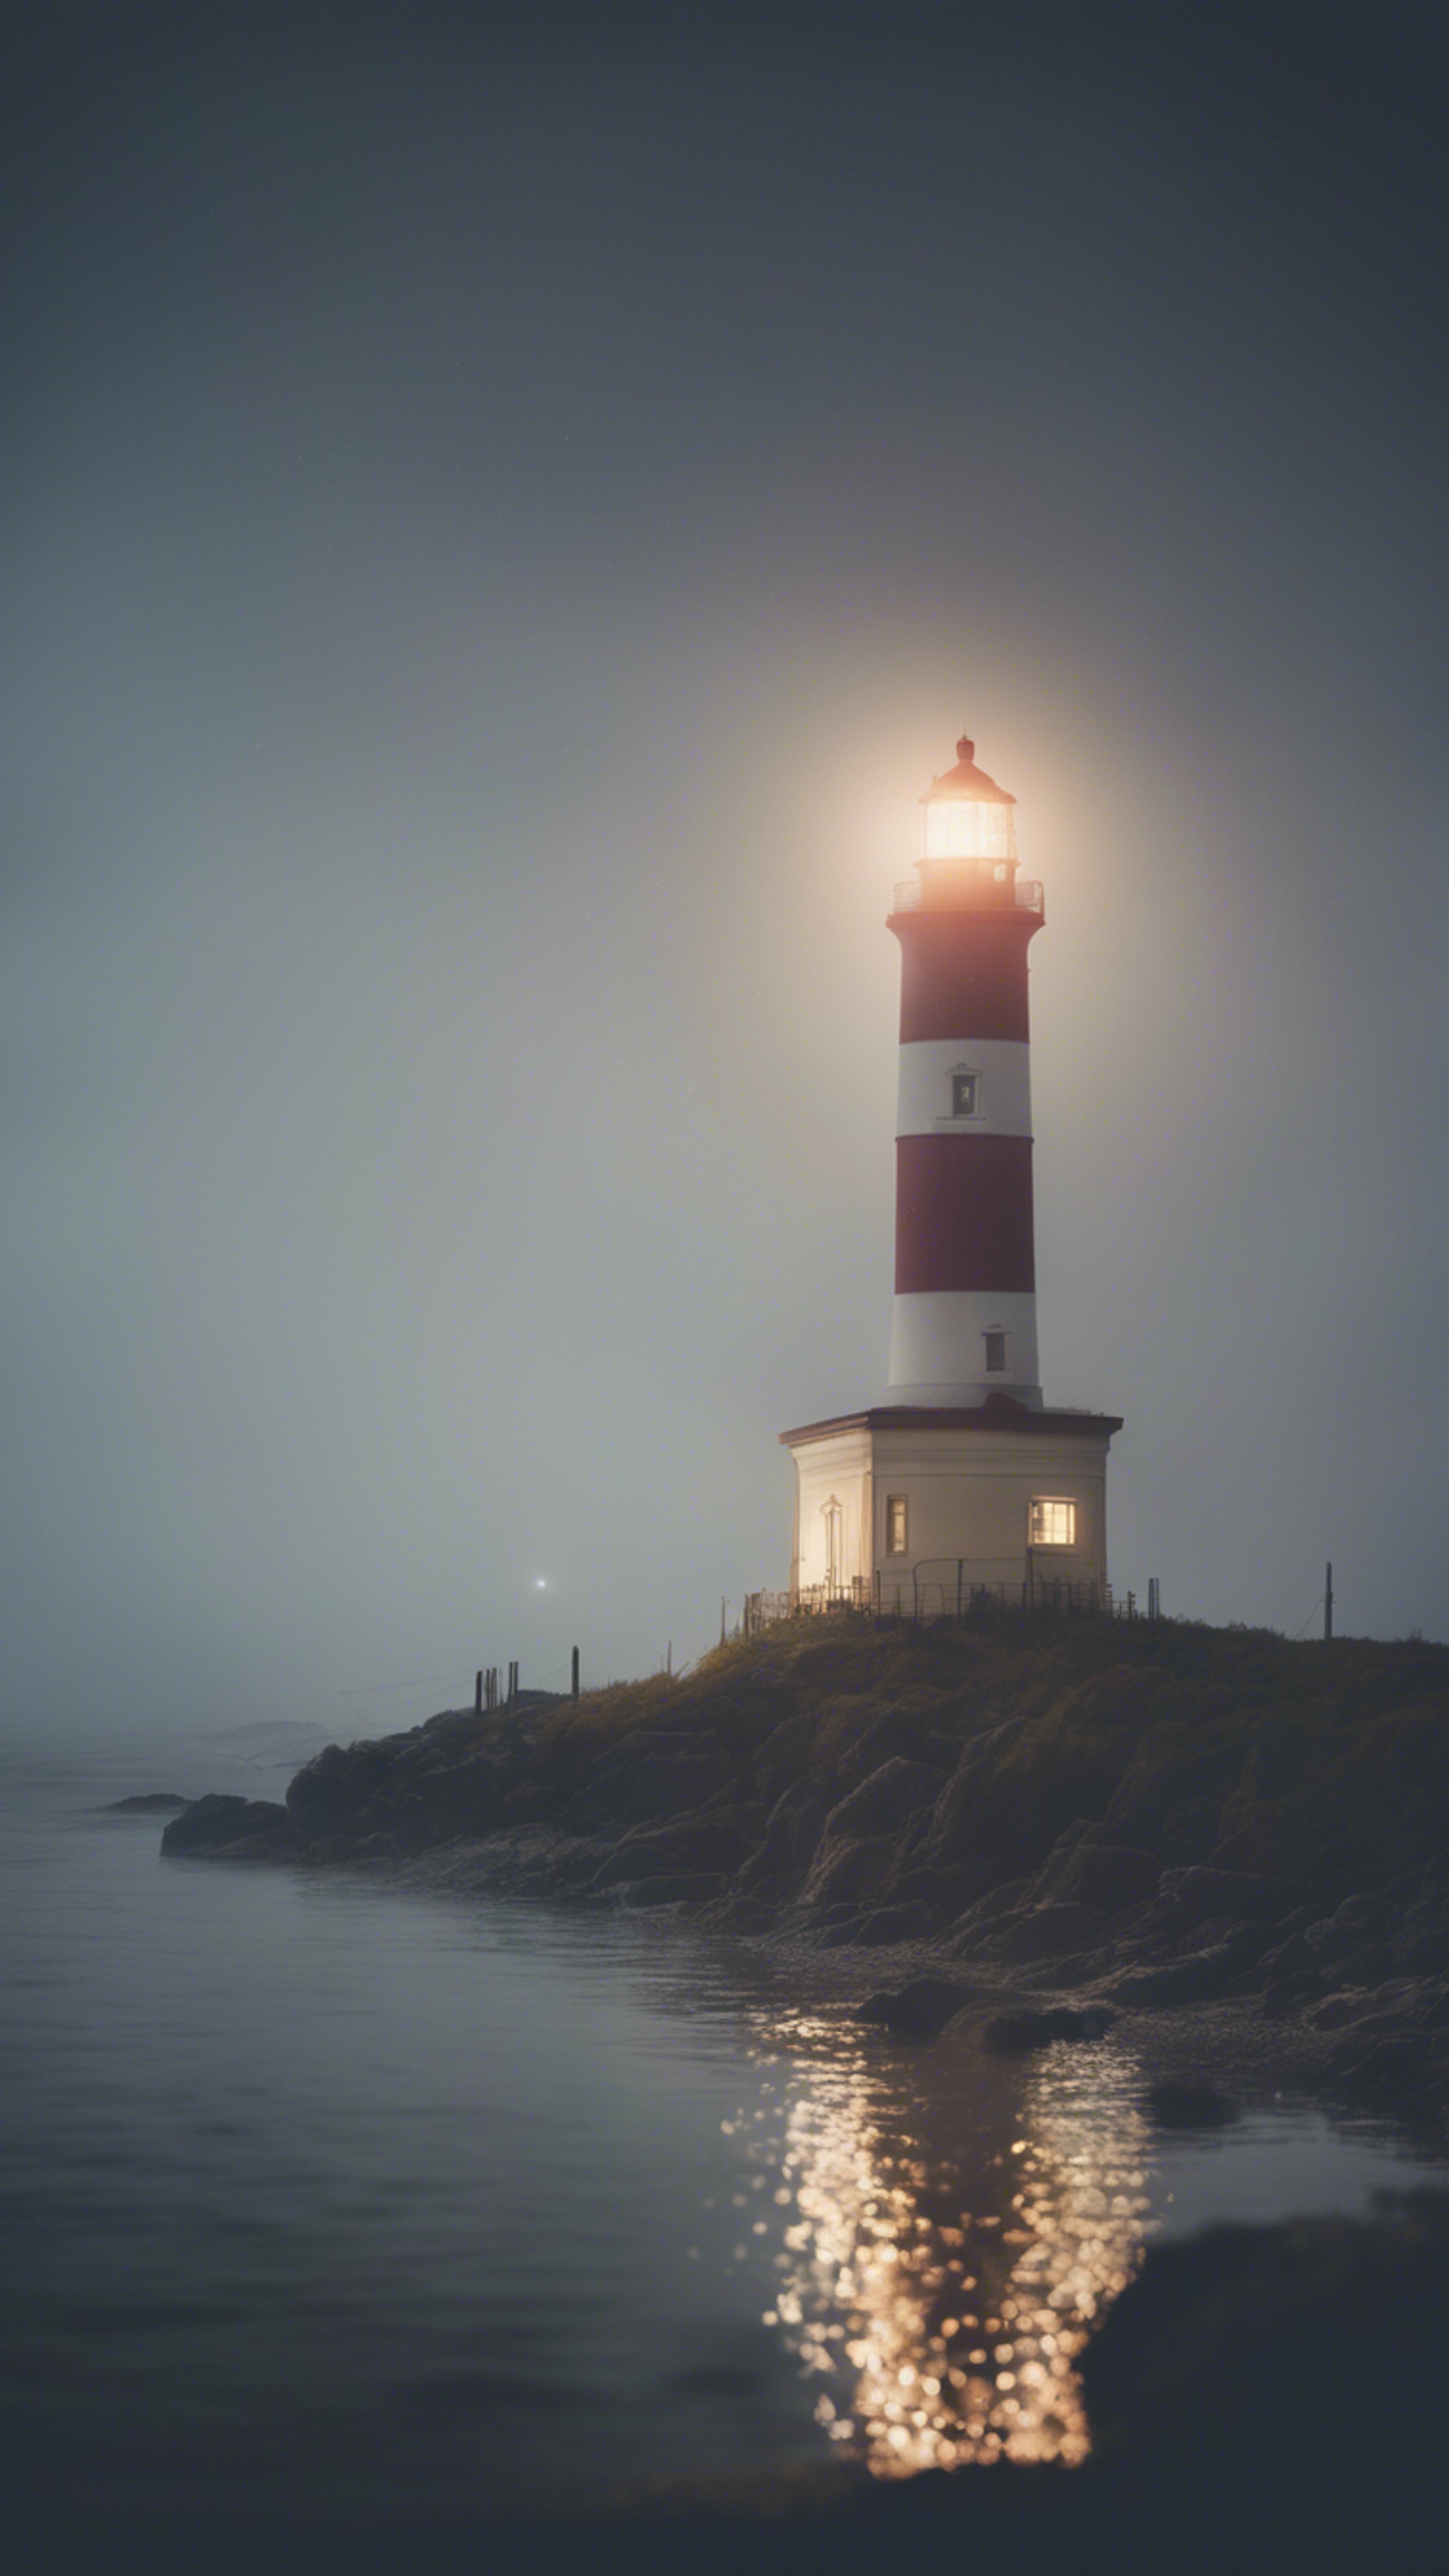 A lighthouse shining brightly amidst a foggy night within a dream world. Wallpaper[93cc8f0219d8441f8056]